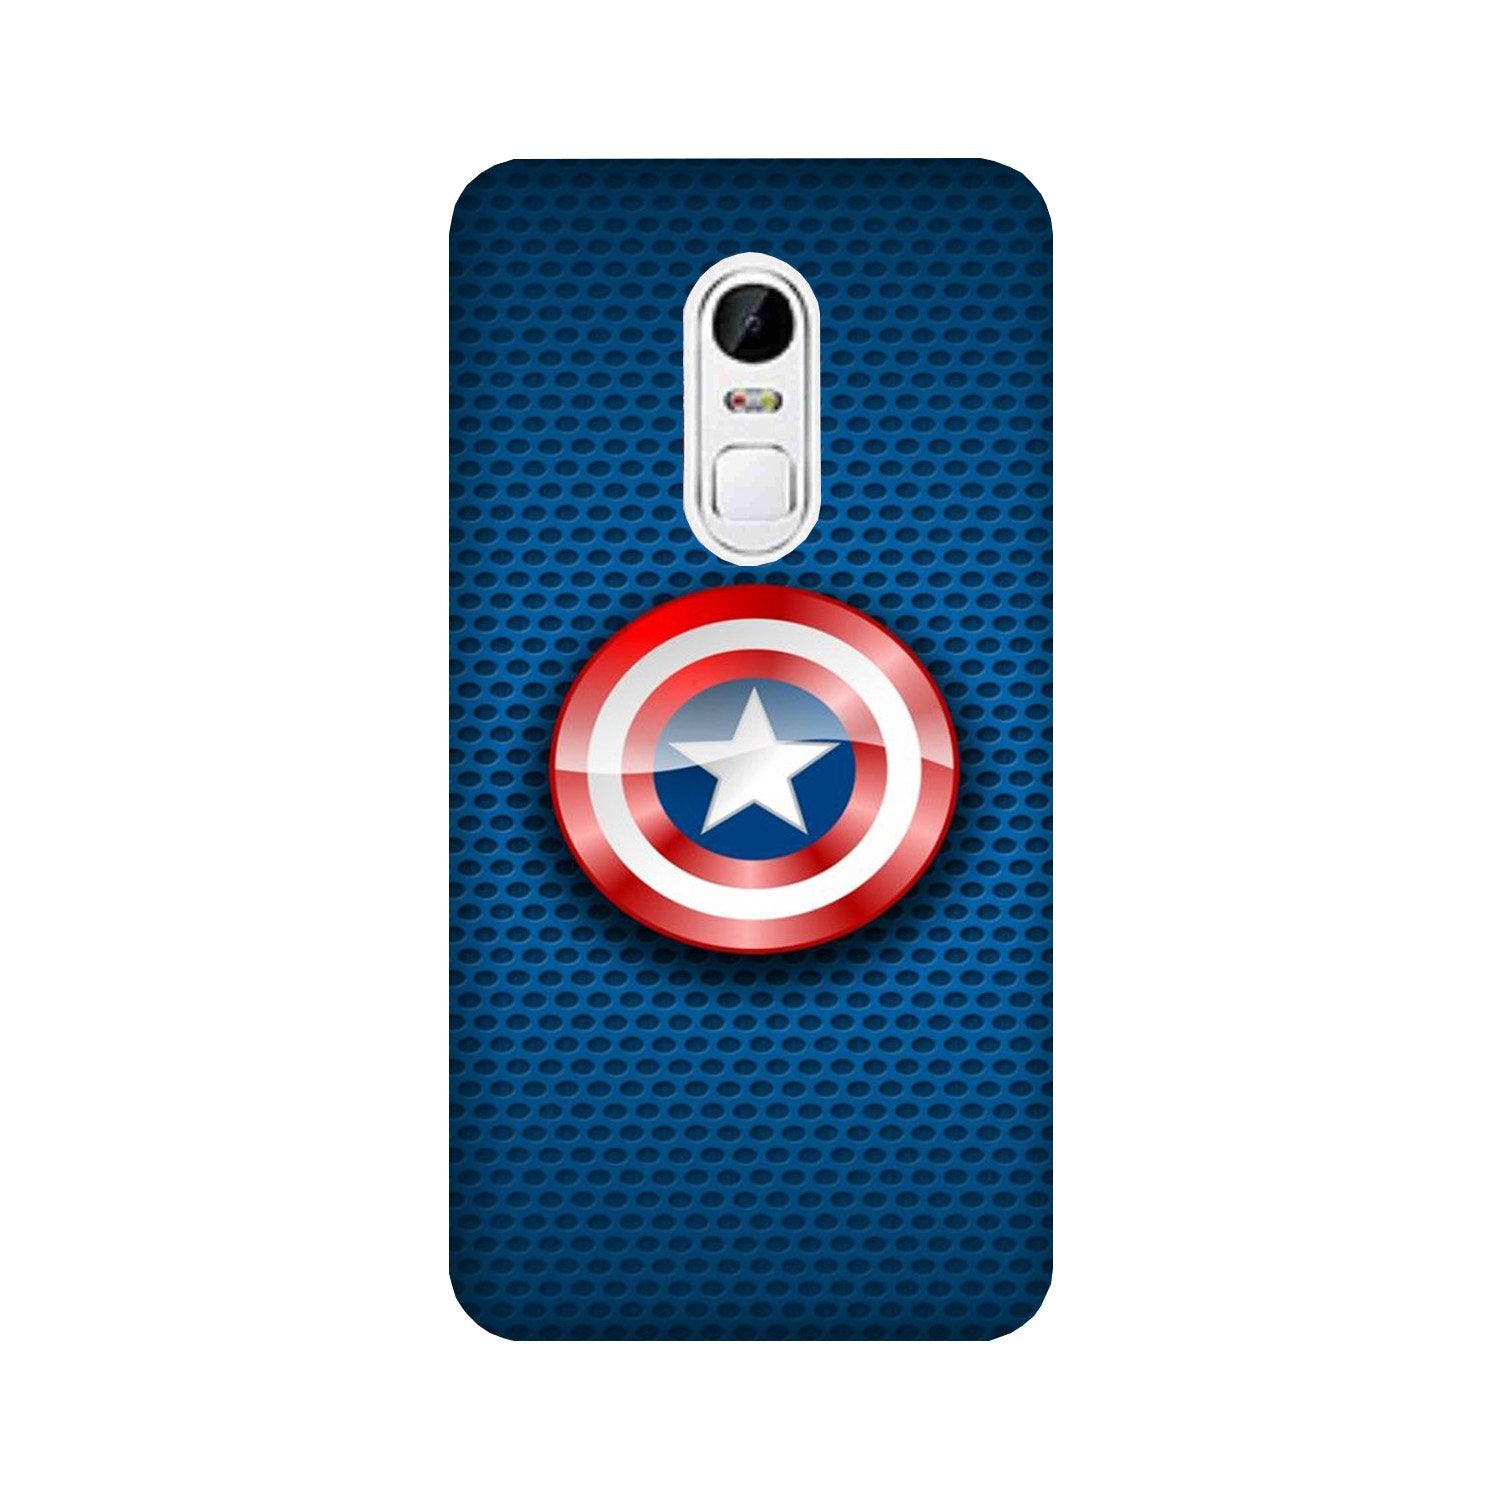 Captain America Shield Case for Lenovo Vibe X3 (Design No. 253)